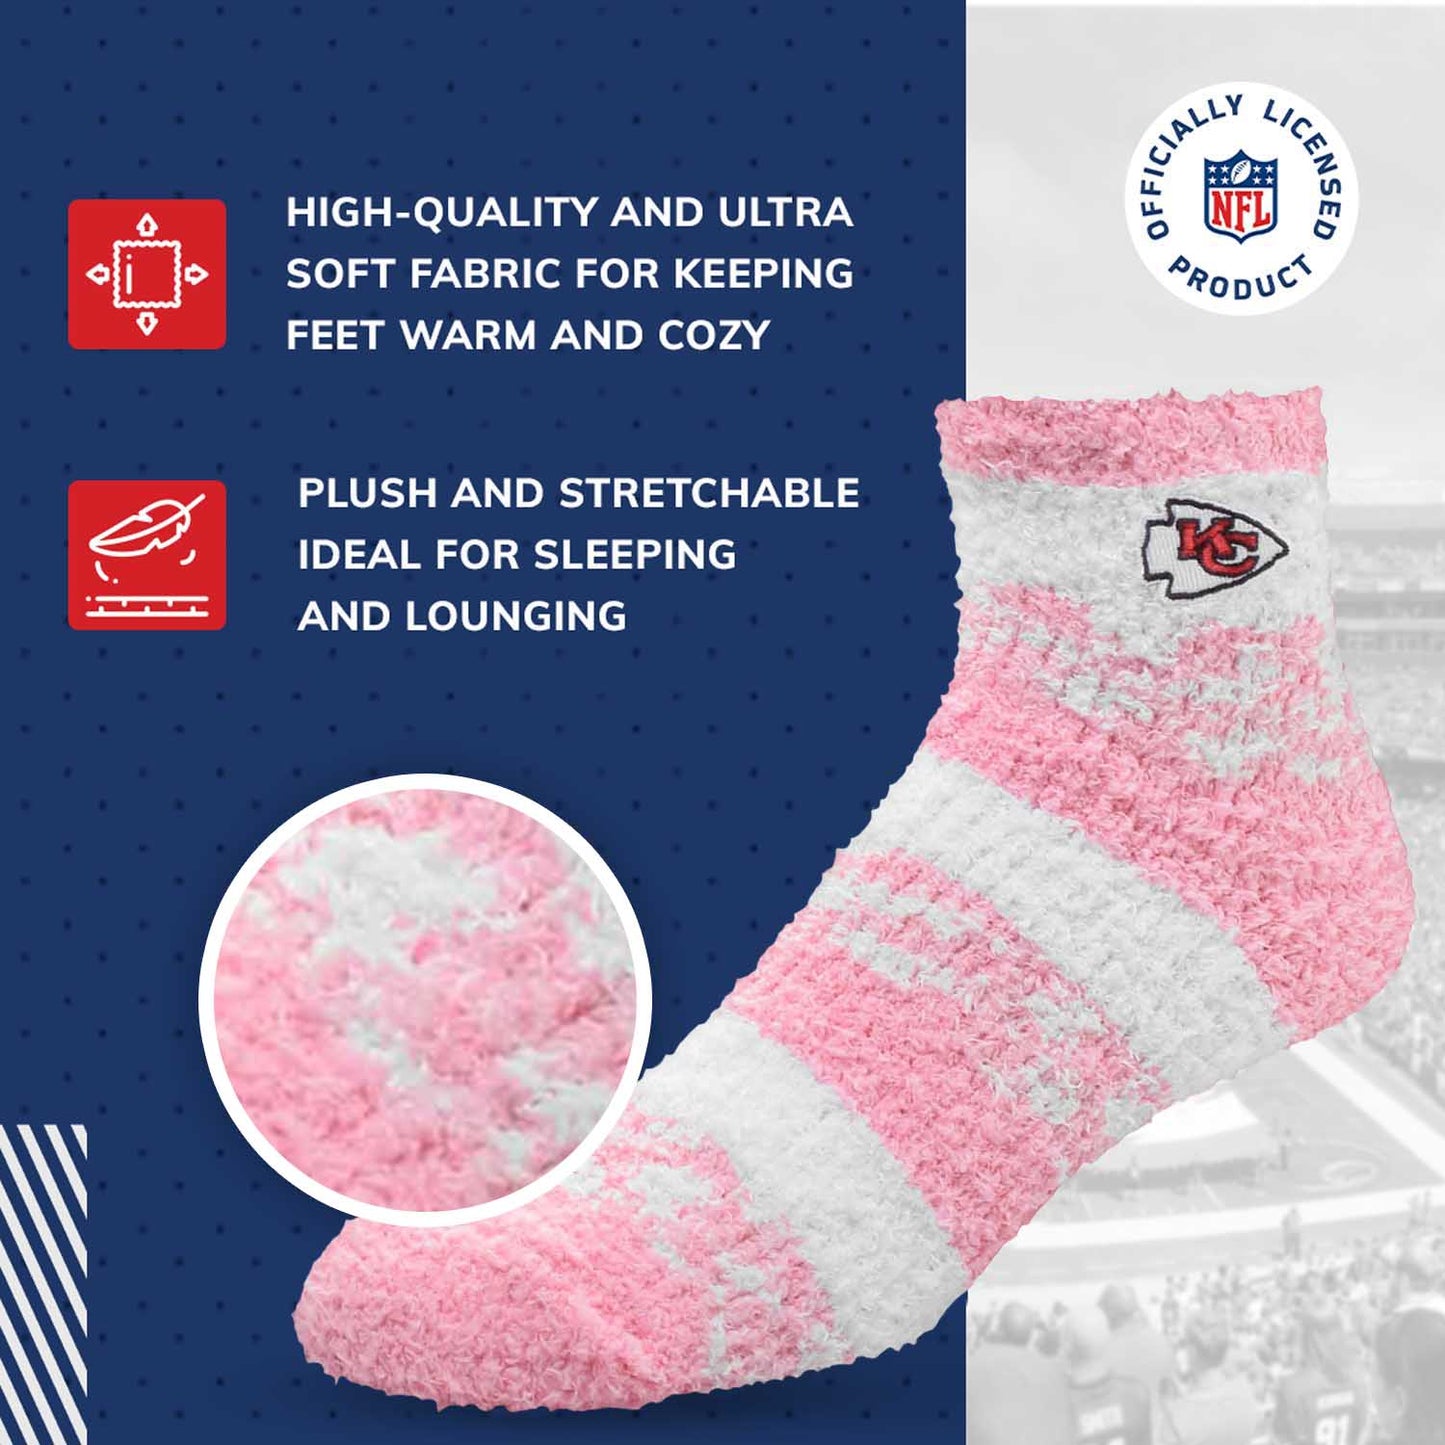 Kansas City Chiefs NFL Cozy Soft Slipper Socks - Pink